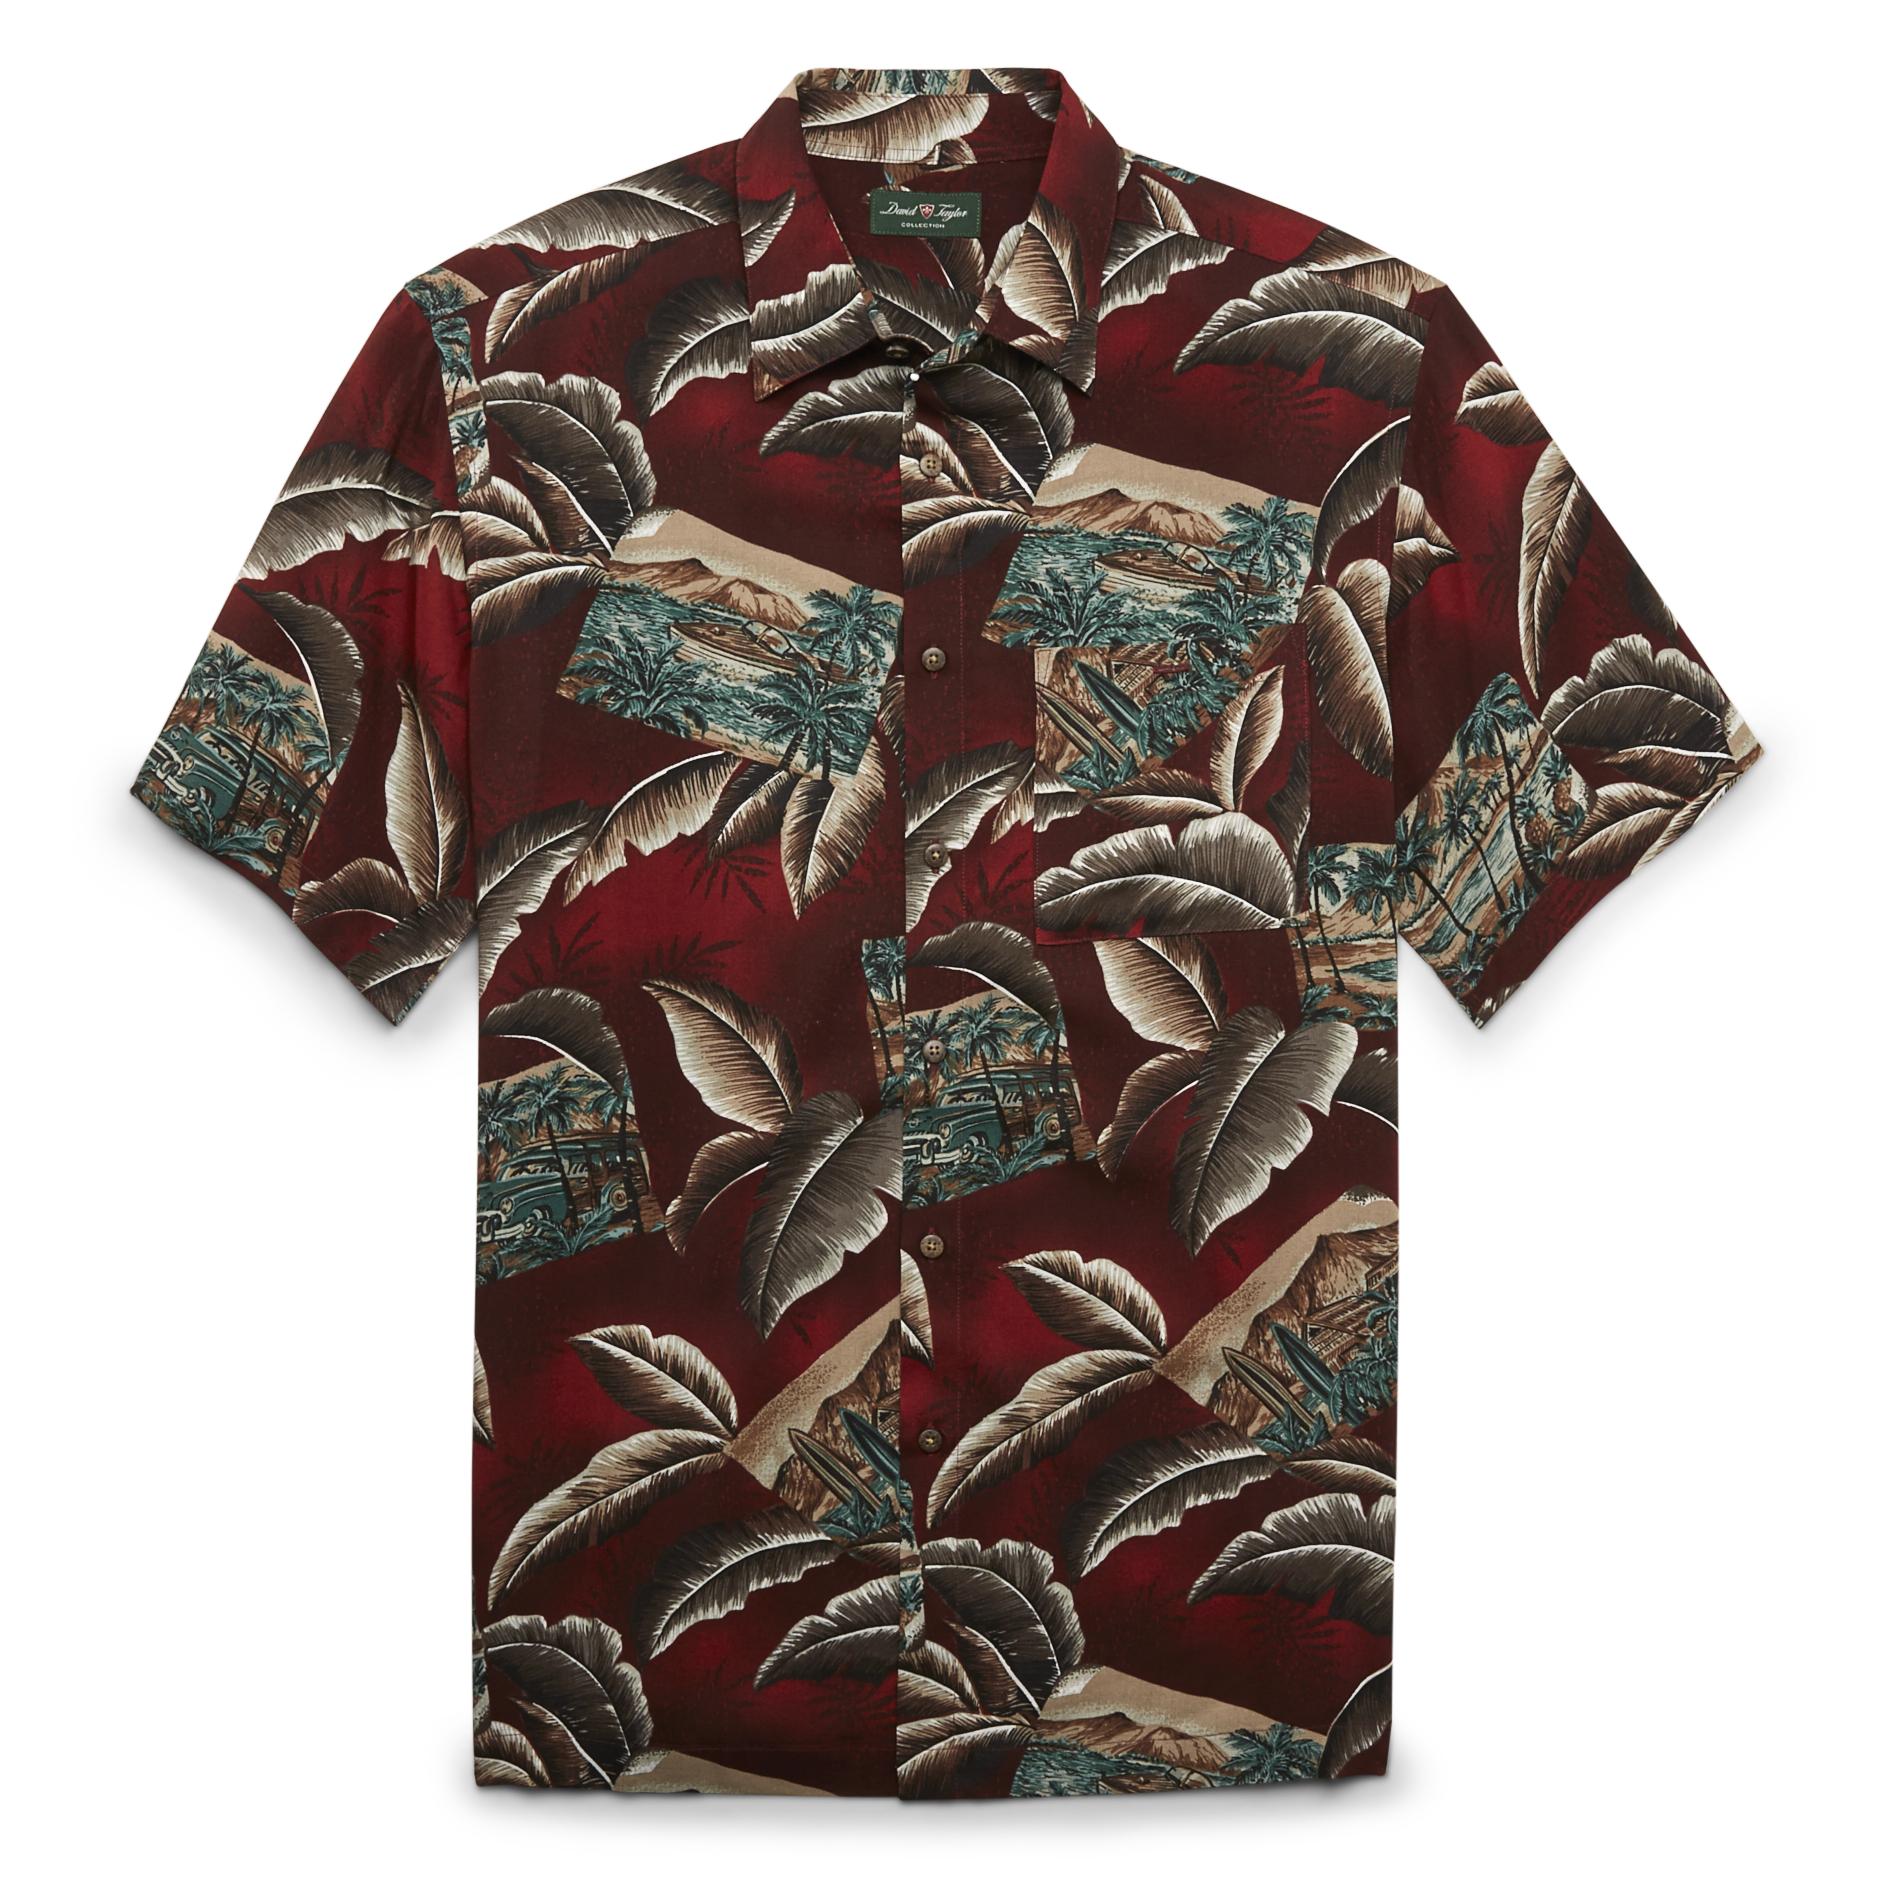 David Taylor Collection Men's Big & Tall Hawaiian Shirt - Palm Tree Print